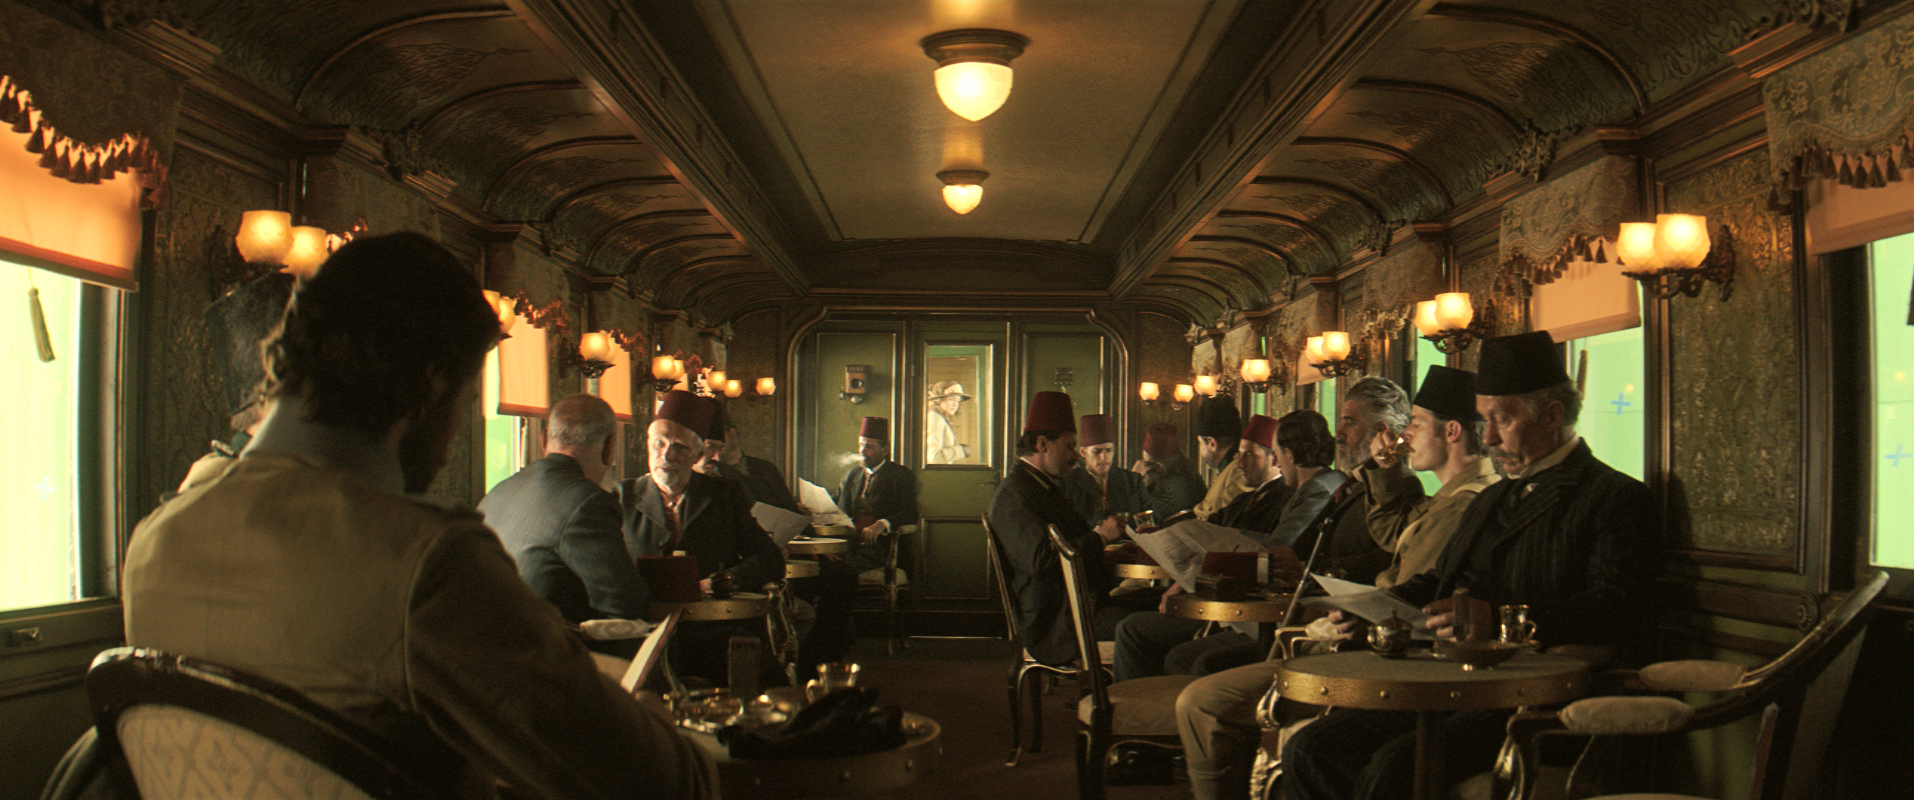 THE OTTOMAN LIEUTENANT - Directed by Joseph Ruben - Production Design by Luca Tranchino - Int. Train Wagon - ©2016 - Y Stone